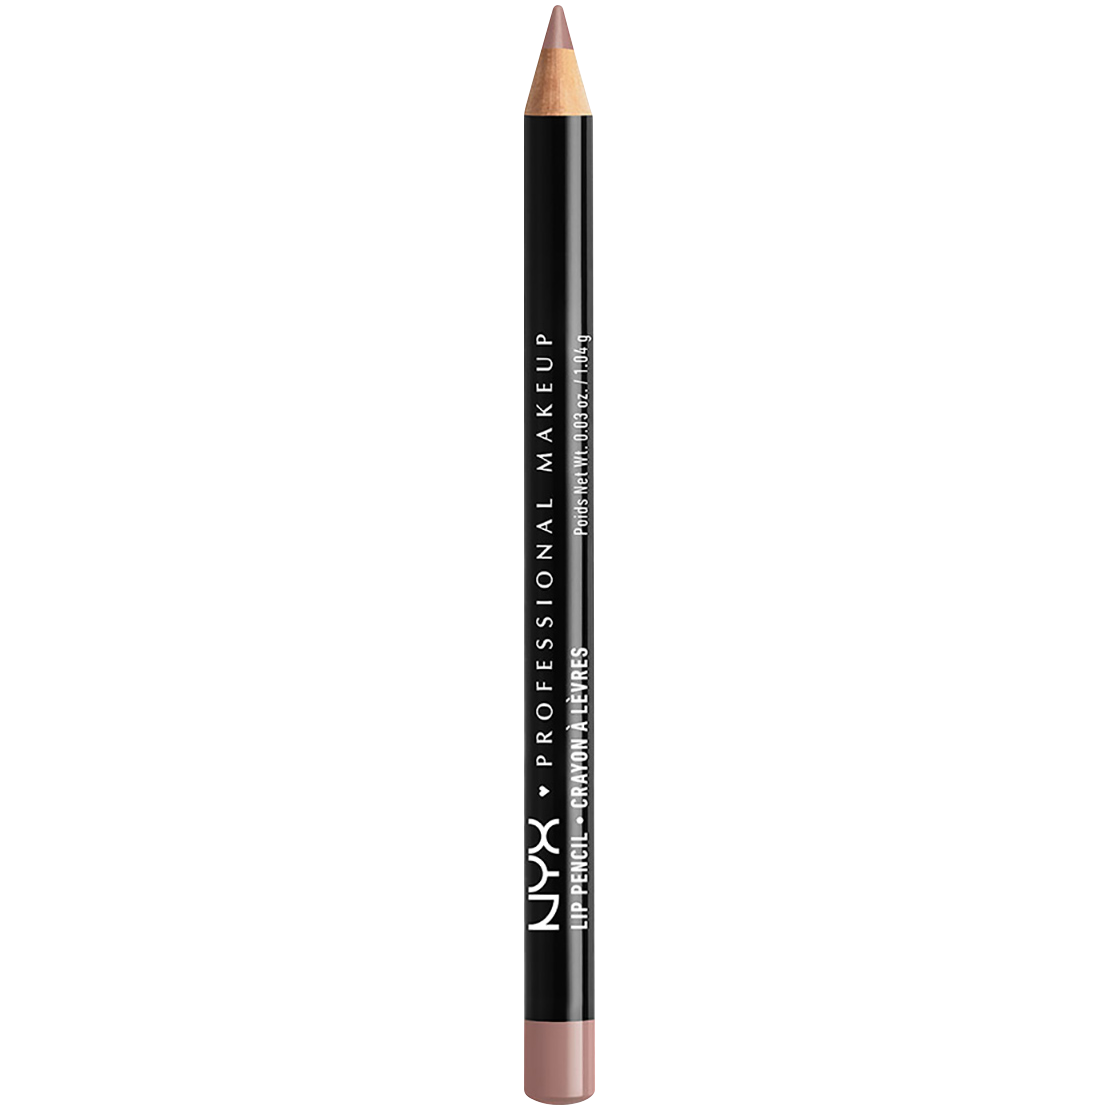 Карандаш для губ красного дерева Nyx Professional Makeup Slide On, 1 гр nyx lip pencil slim 20 espresso 0 03 oz 1 04 g